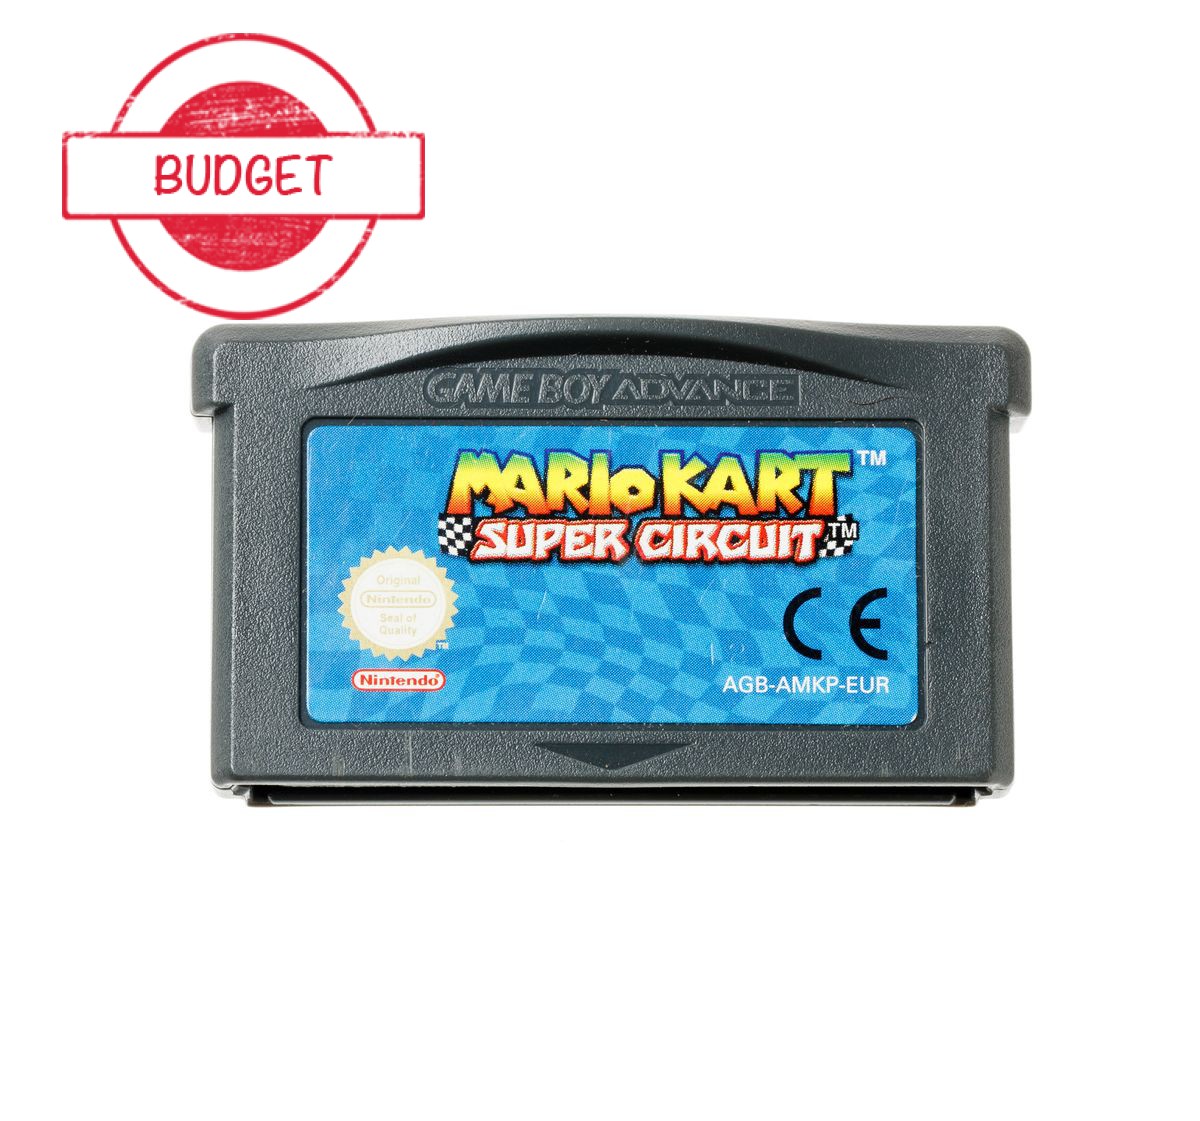 Mario Kart Super Circuit - Budget Kopen | Gameboy Advance Games